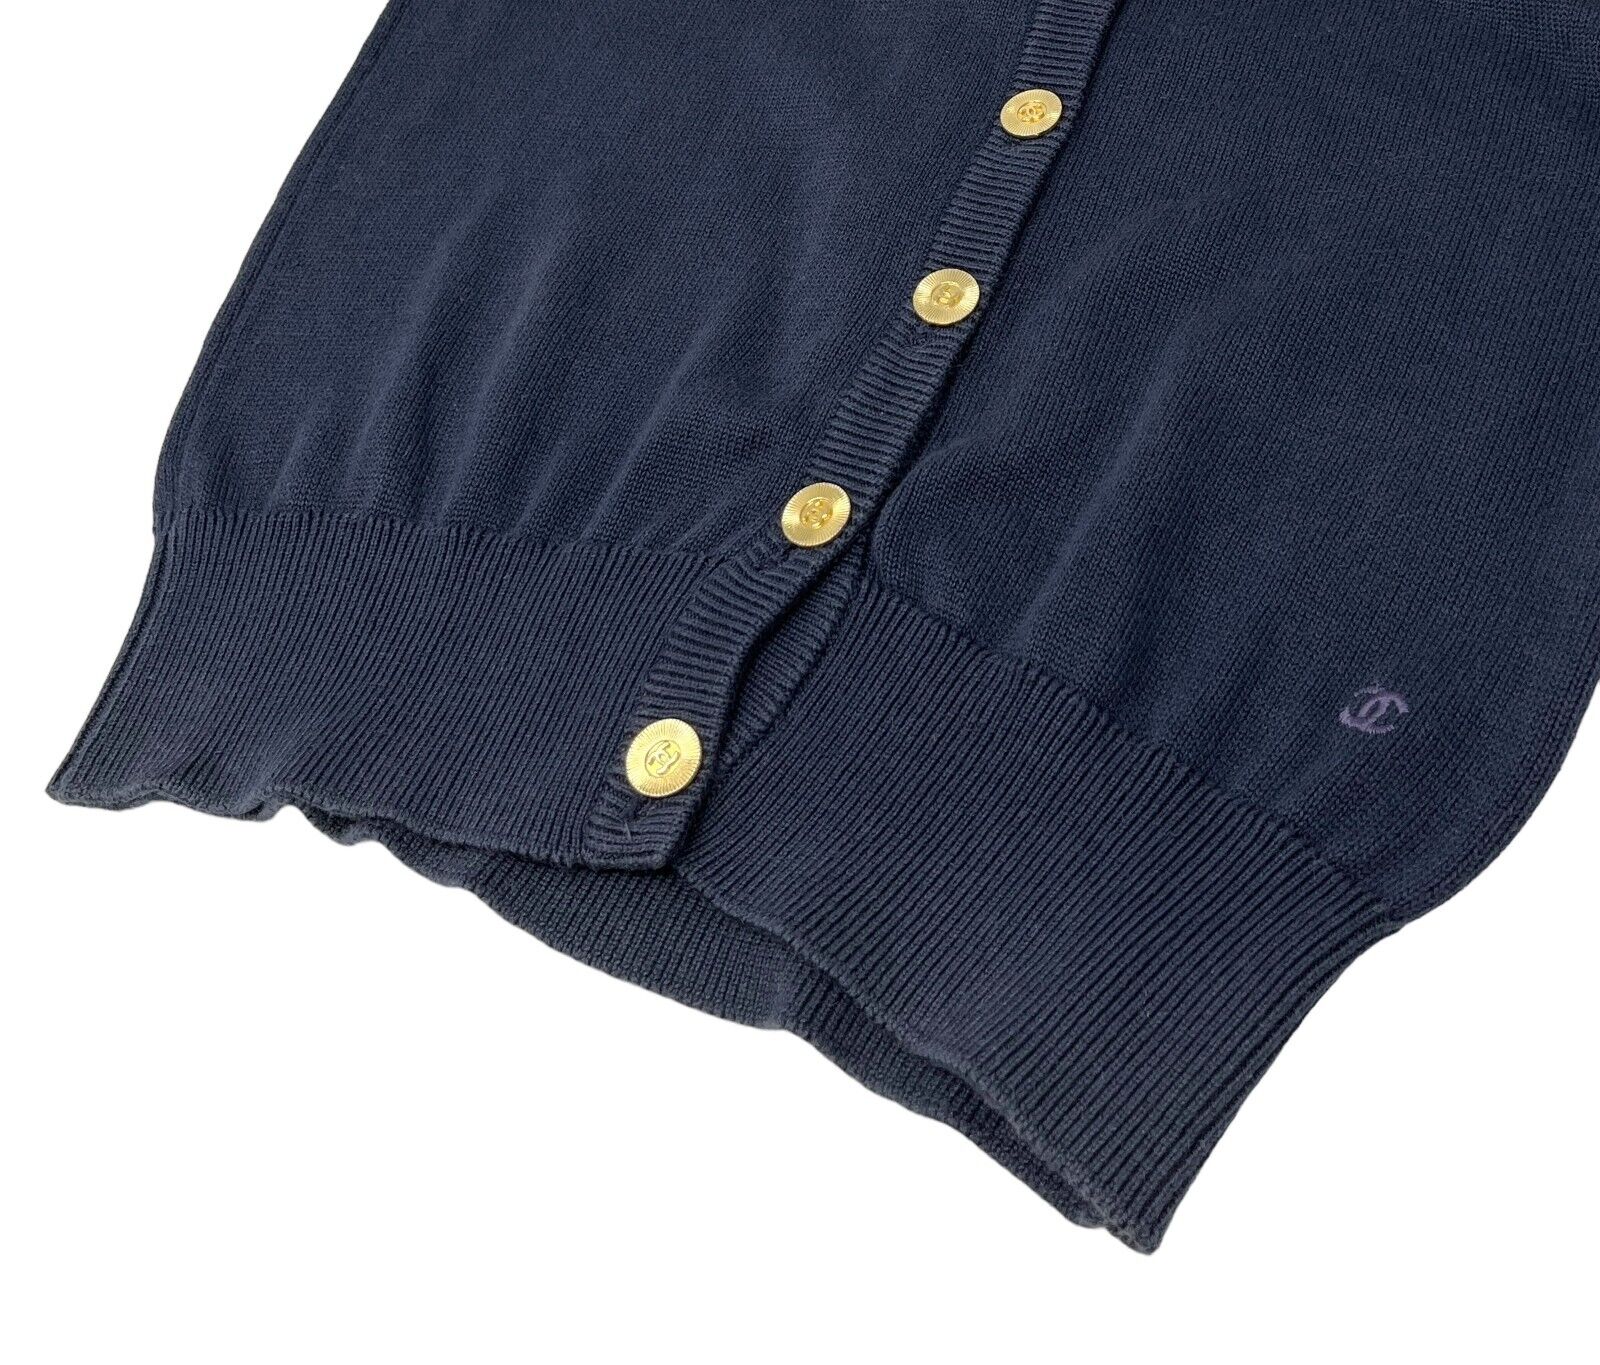 CHANEL Vintage CC Cardigan Sweater Top #L Bicolor White Blue Cotton RankAB